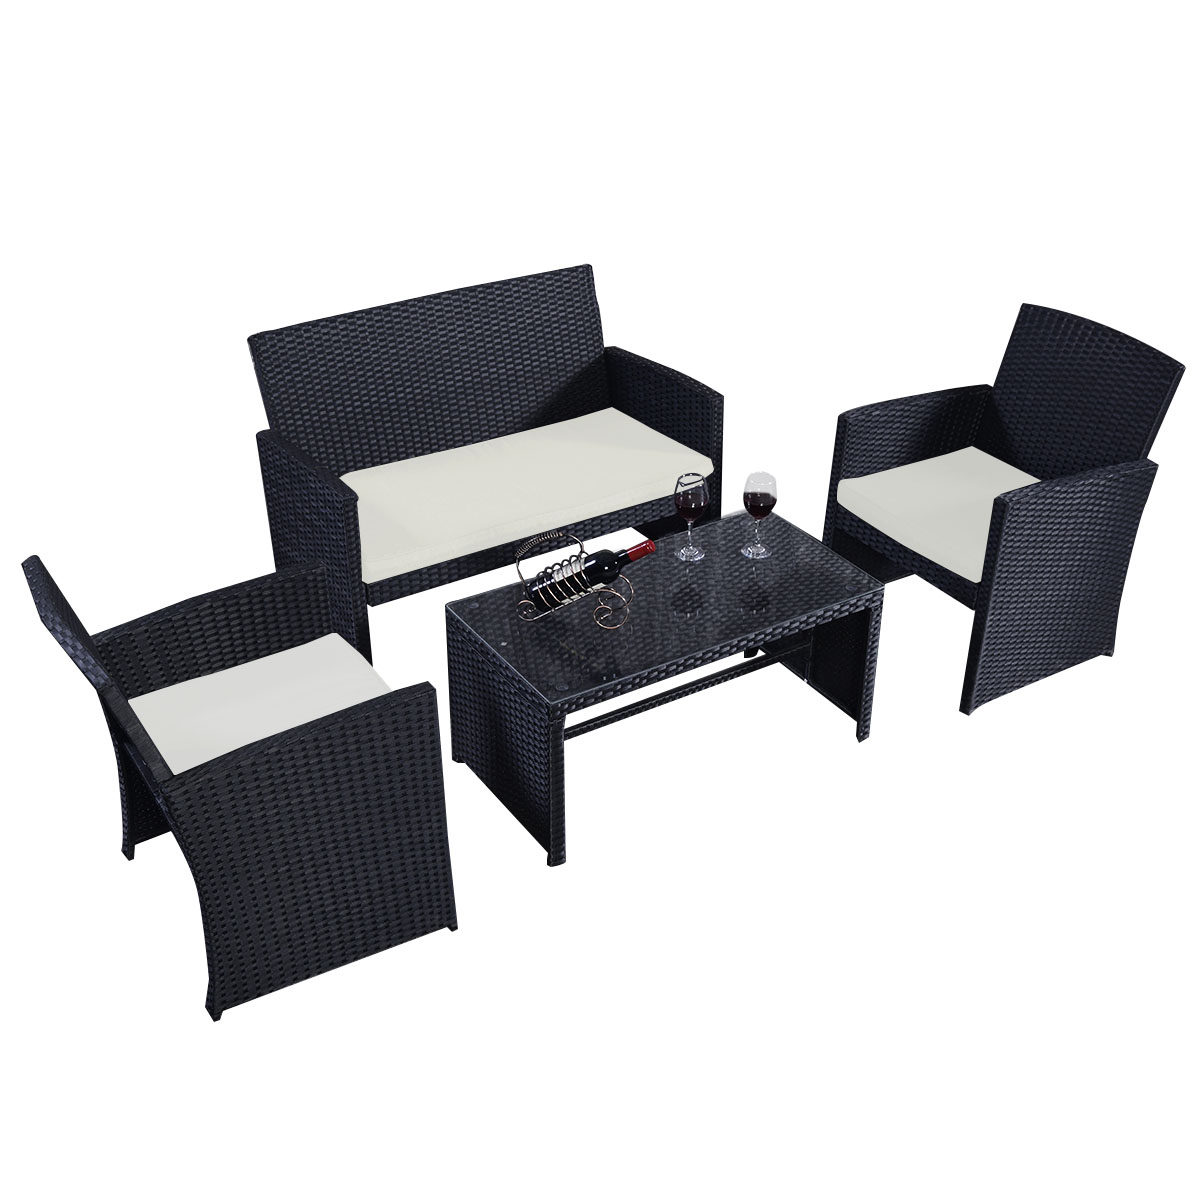 CB16574 Outdoor Wicker Rattan Patio Furniture Set, Black - 4 Piece - image 3 of 6